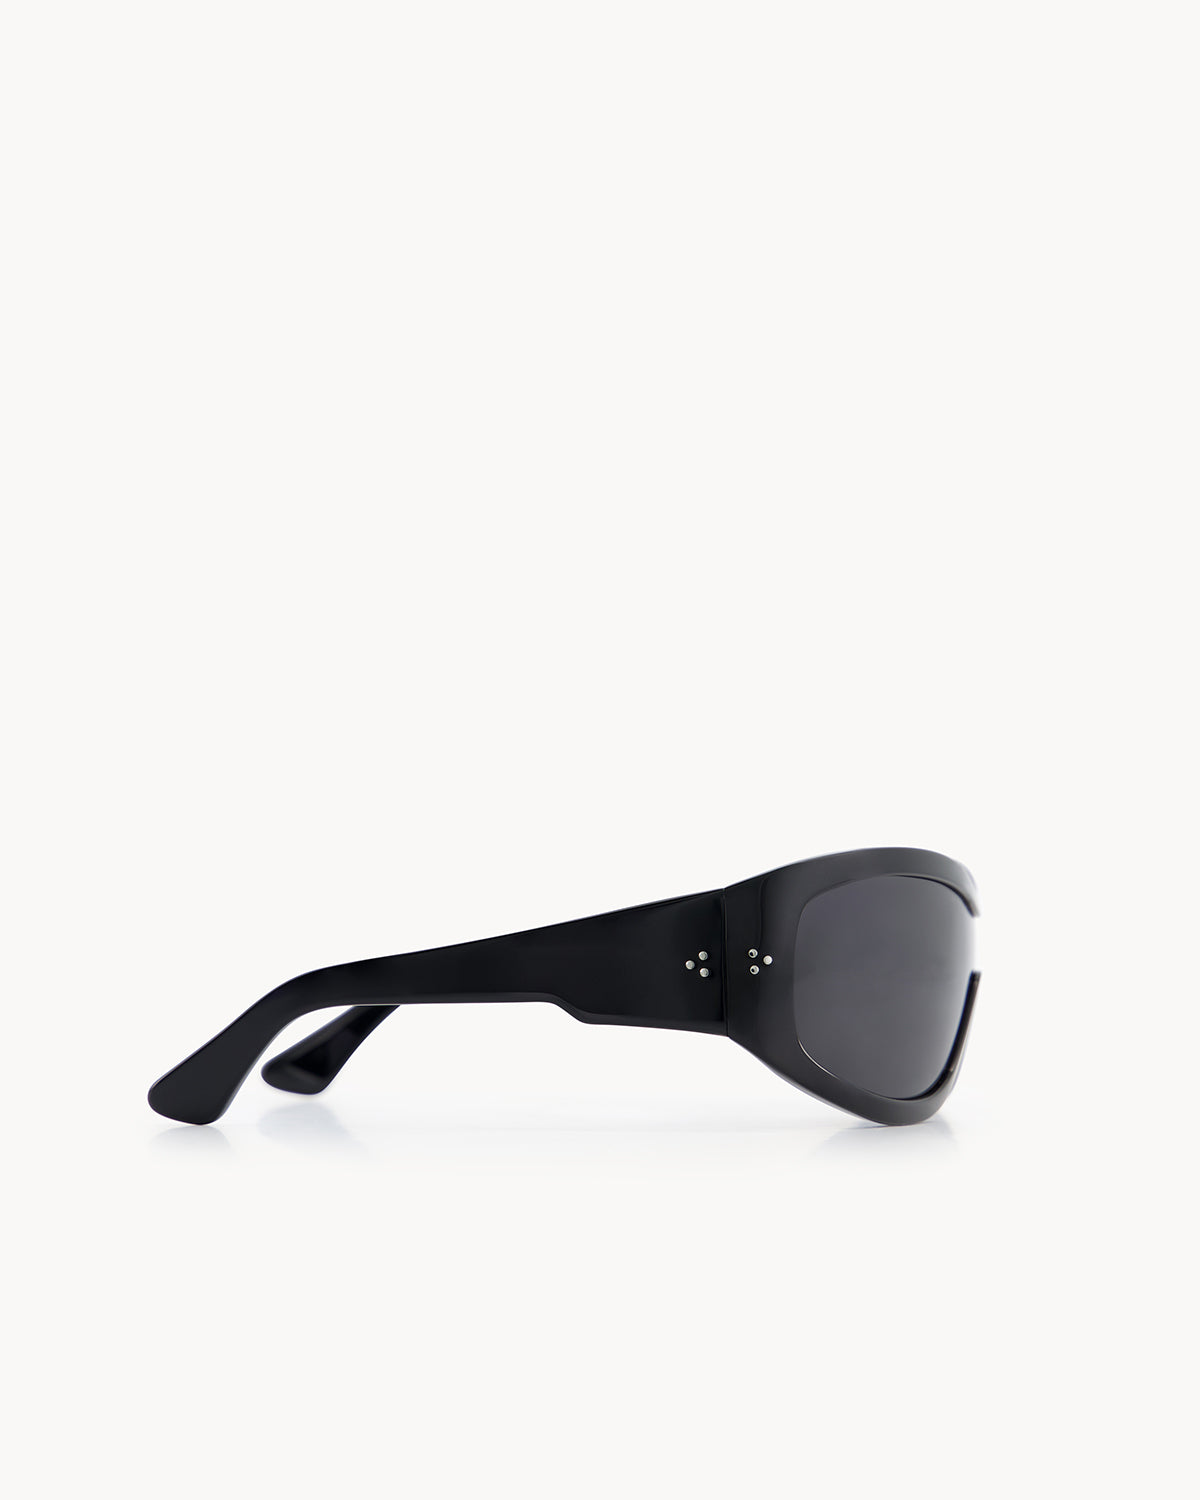 Port Tanger Nunny Sunglasses in Black Acetate and Black Lenses 4